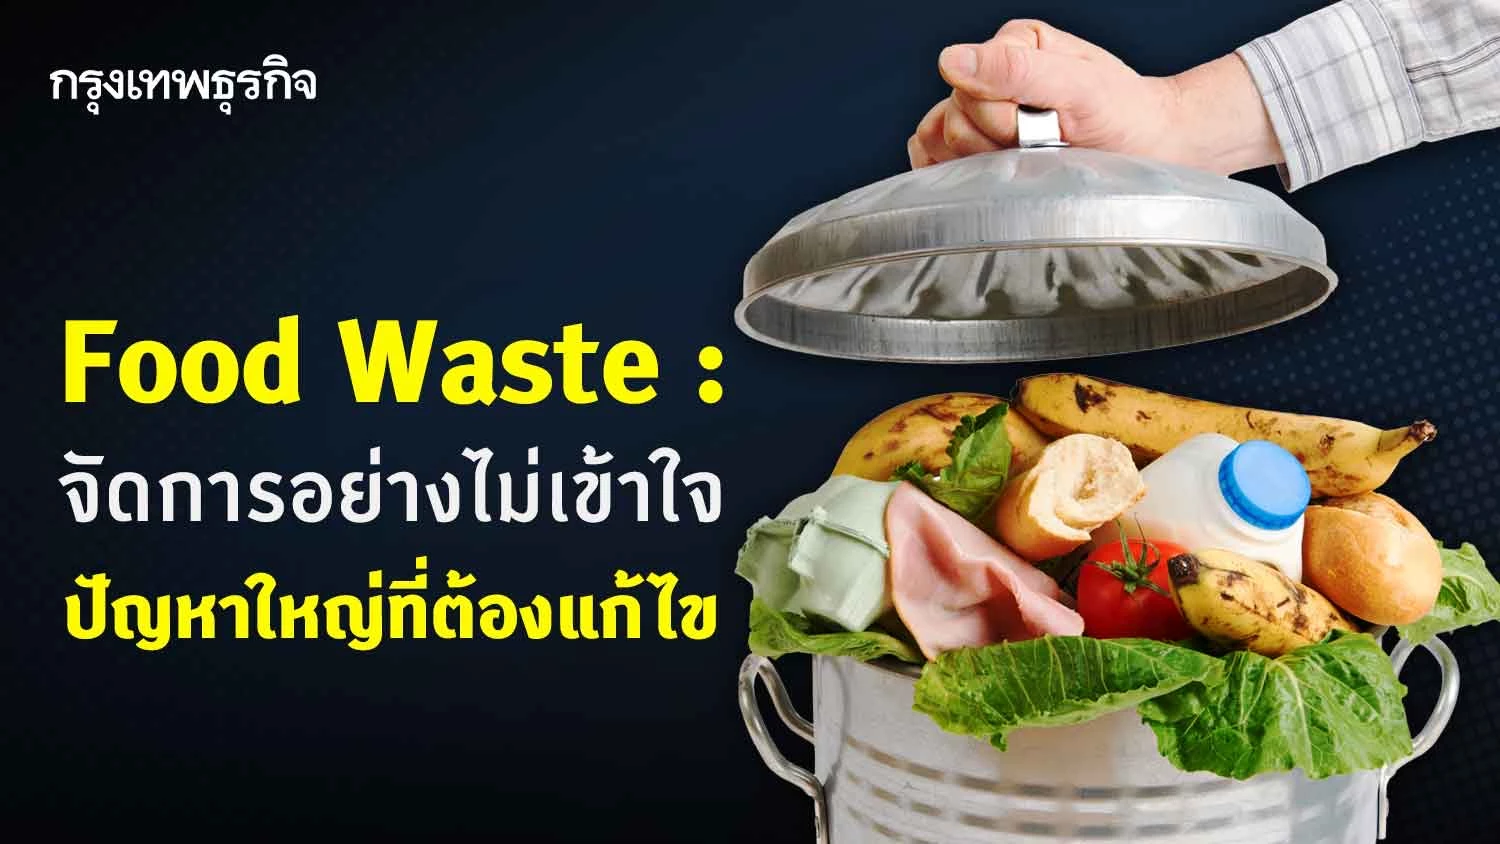 Food waste : จัดการอย่างไม่เข้าใจ   ปัญหาใหญ่ที่ต้องแก้ไข